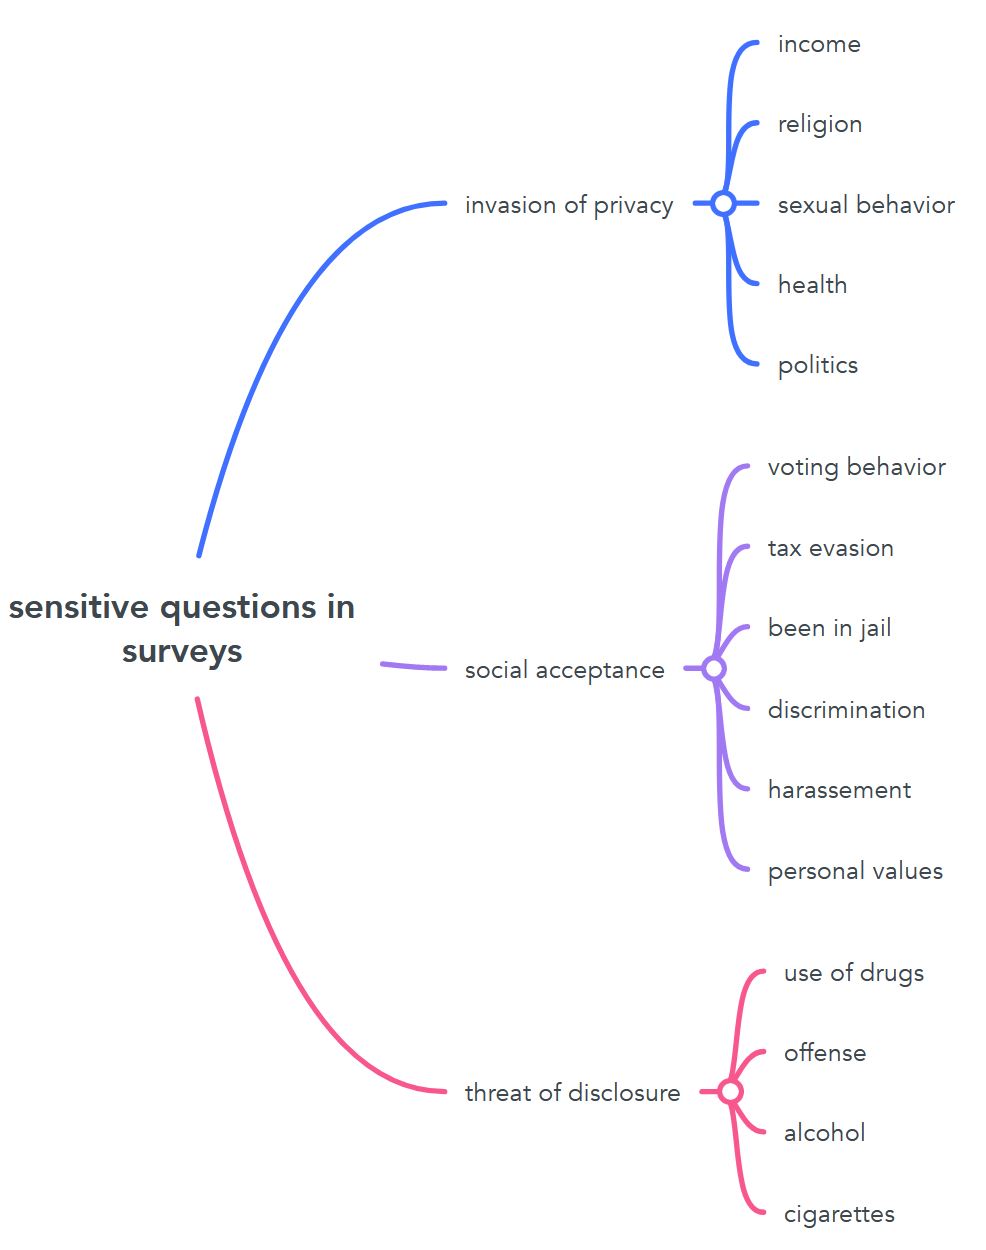 mindmap of sensitive questions in surveys